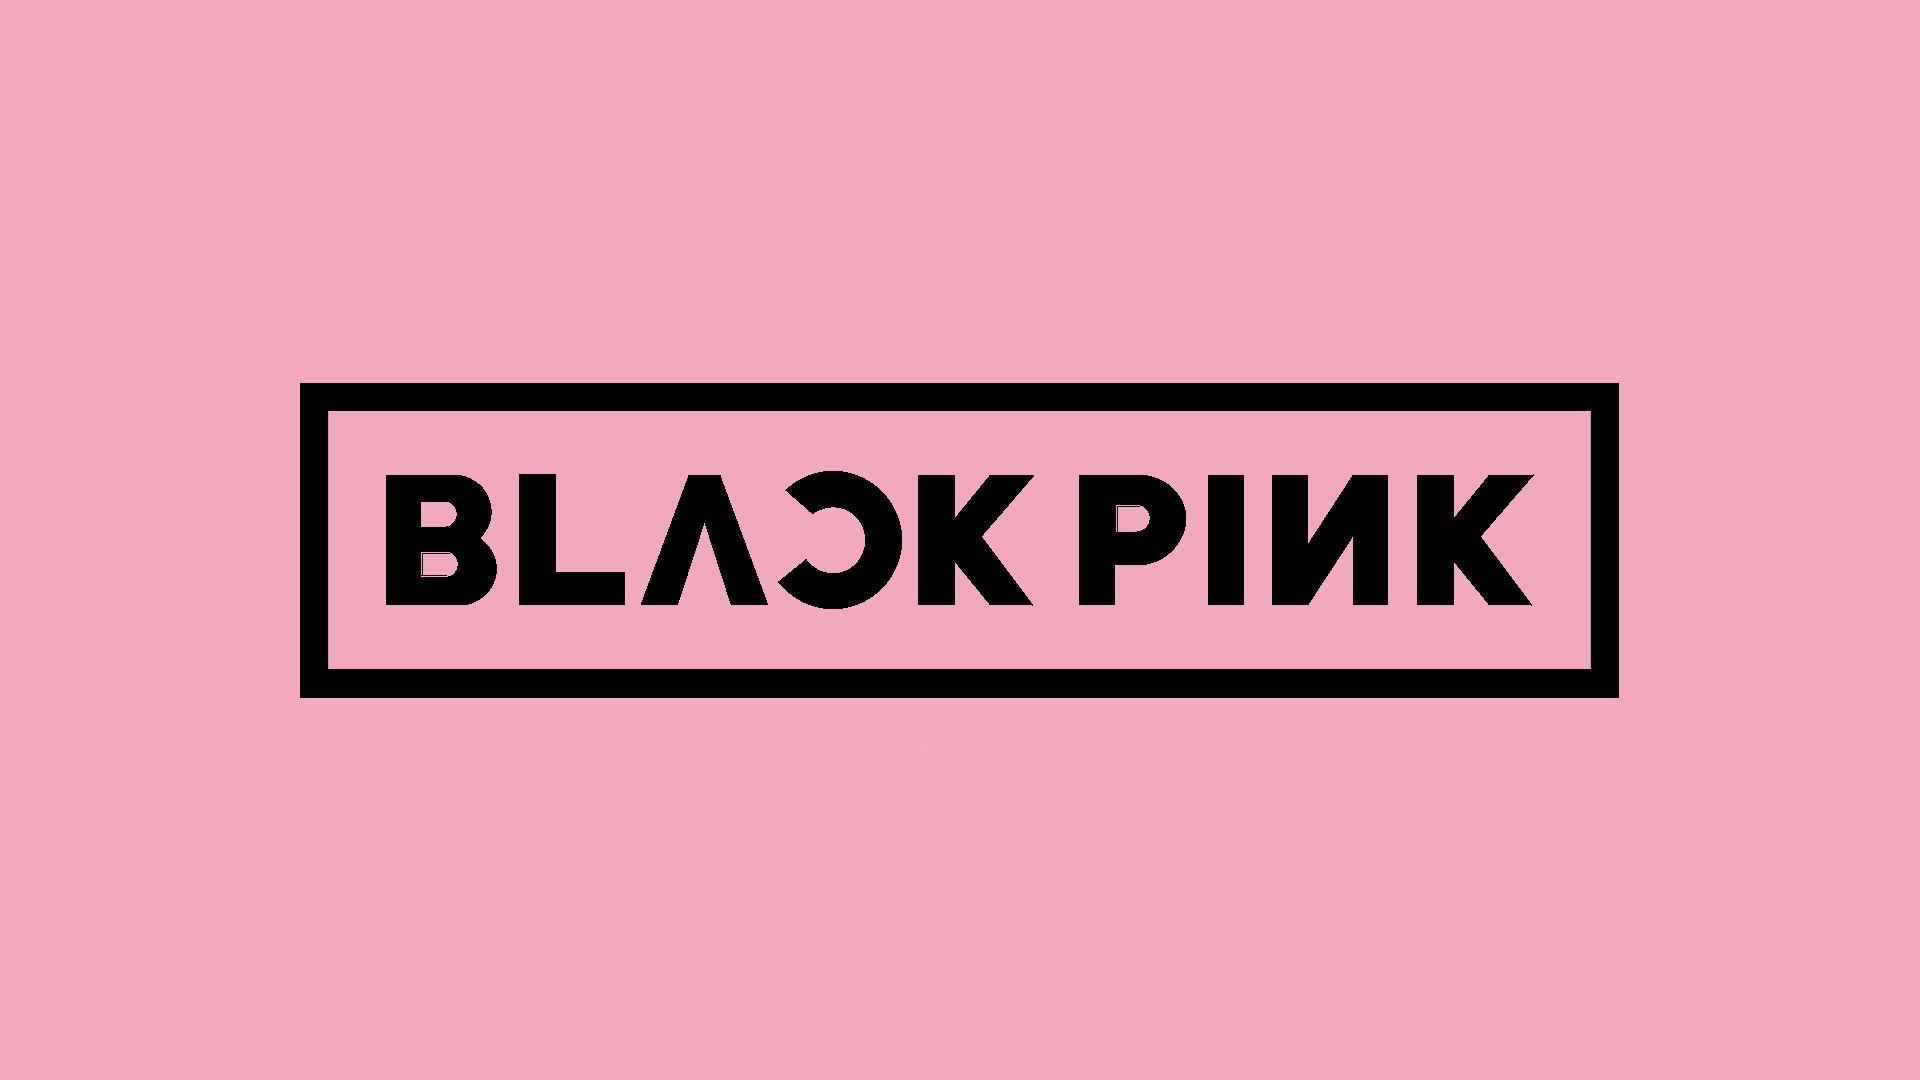 Blackpink Logo Wallpapers